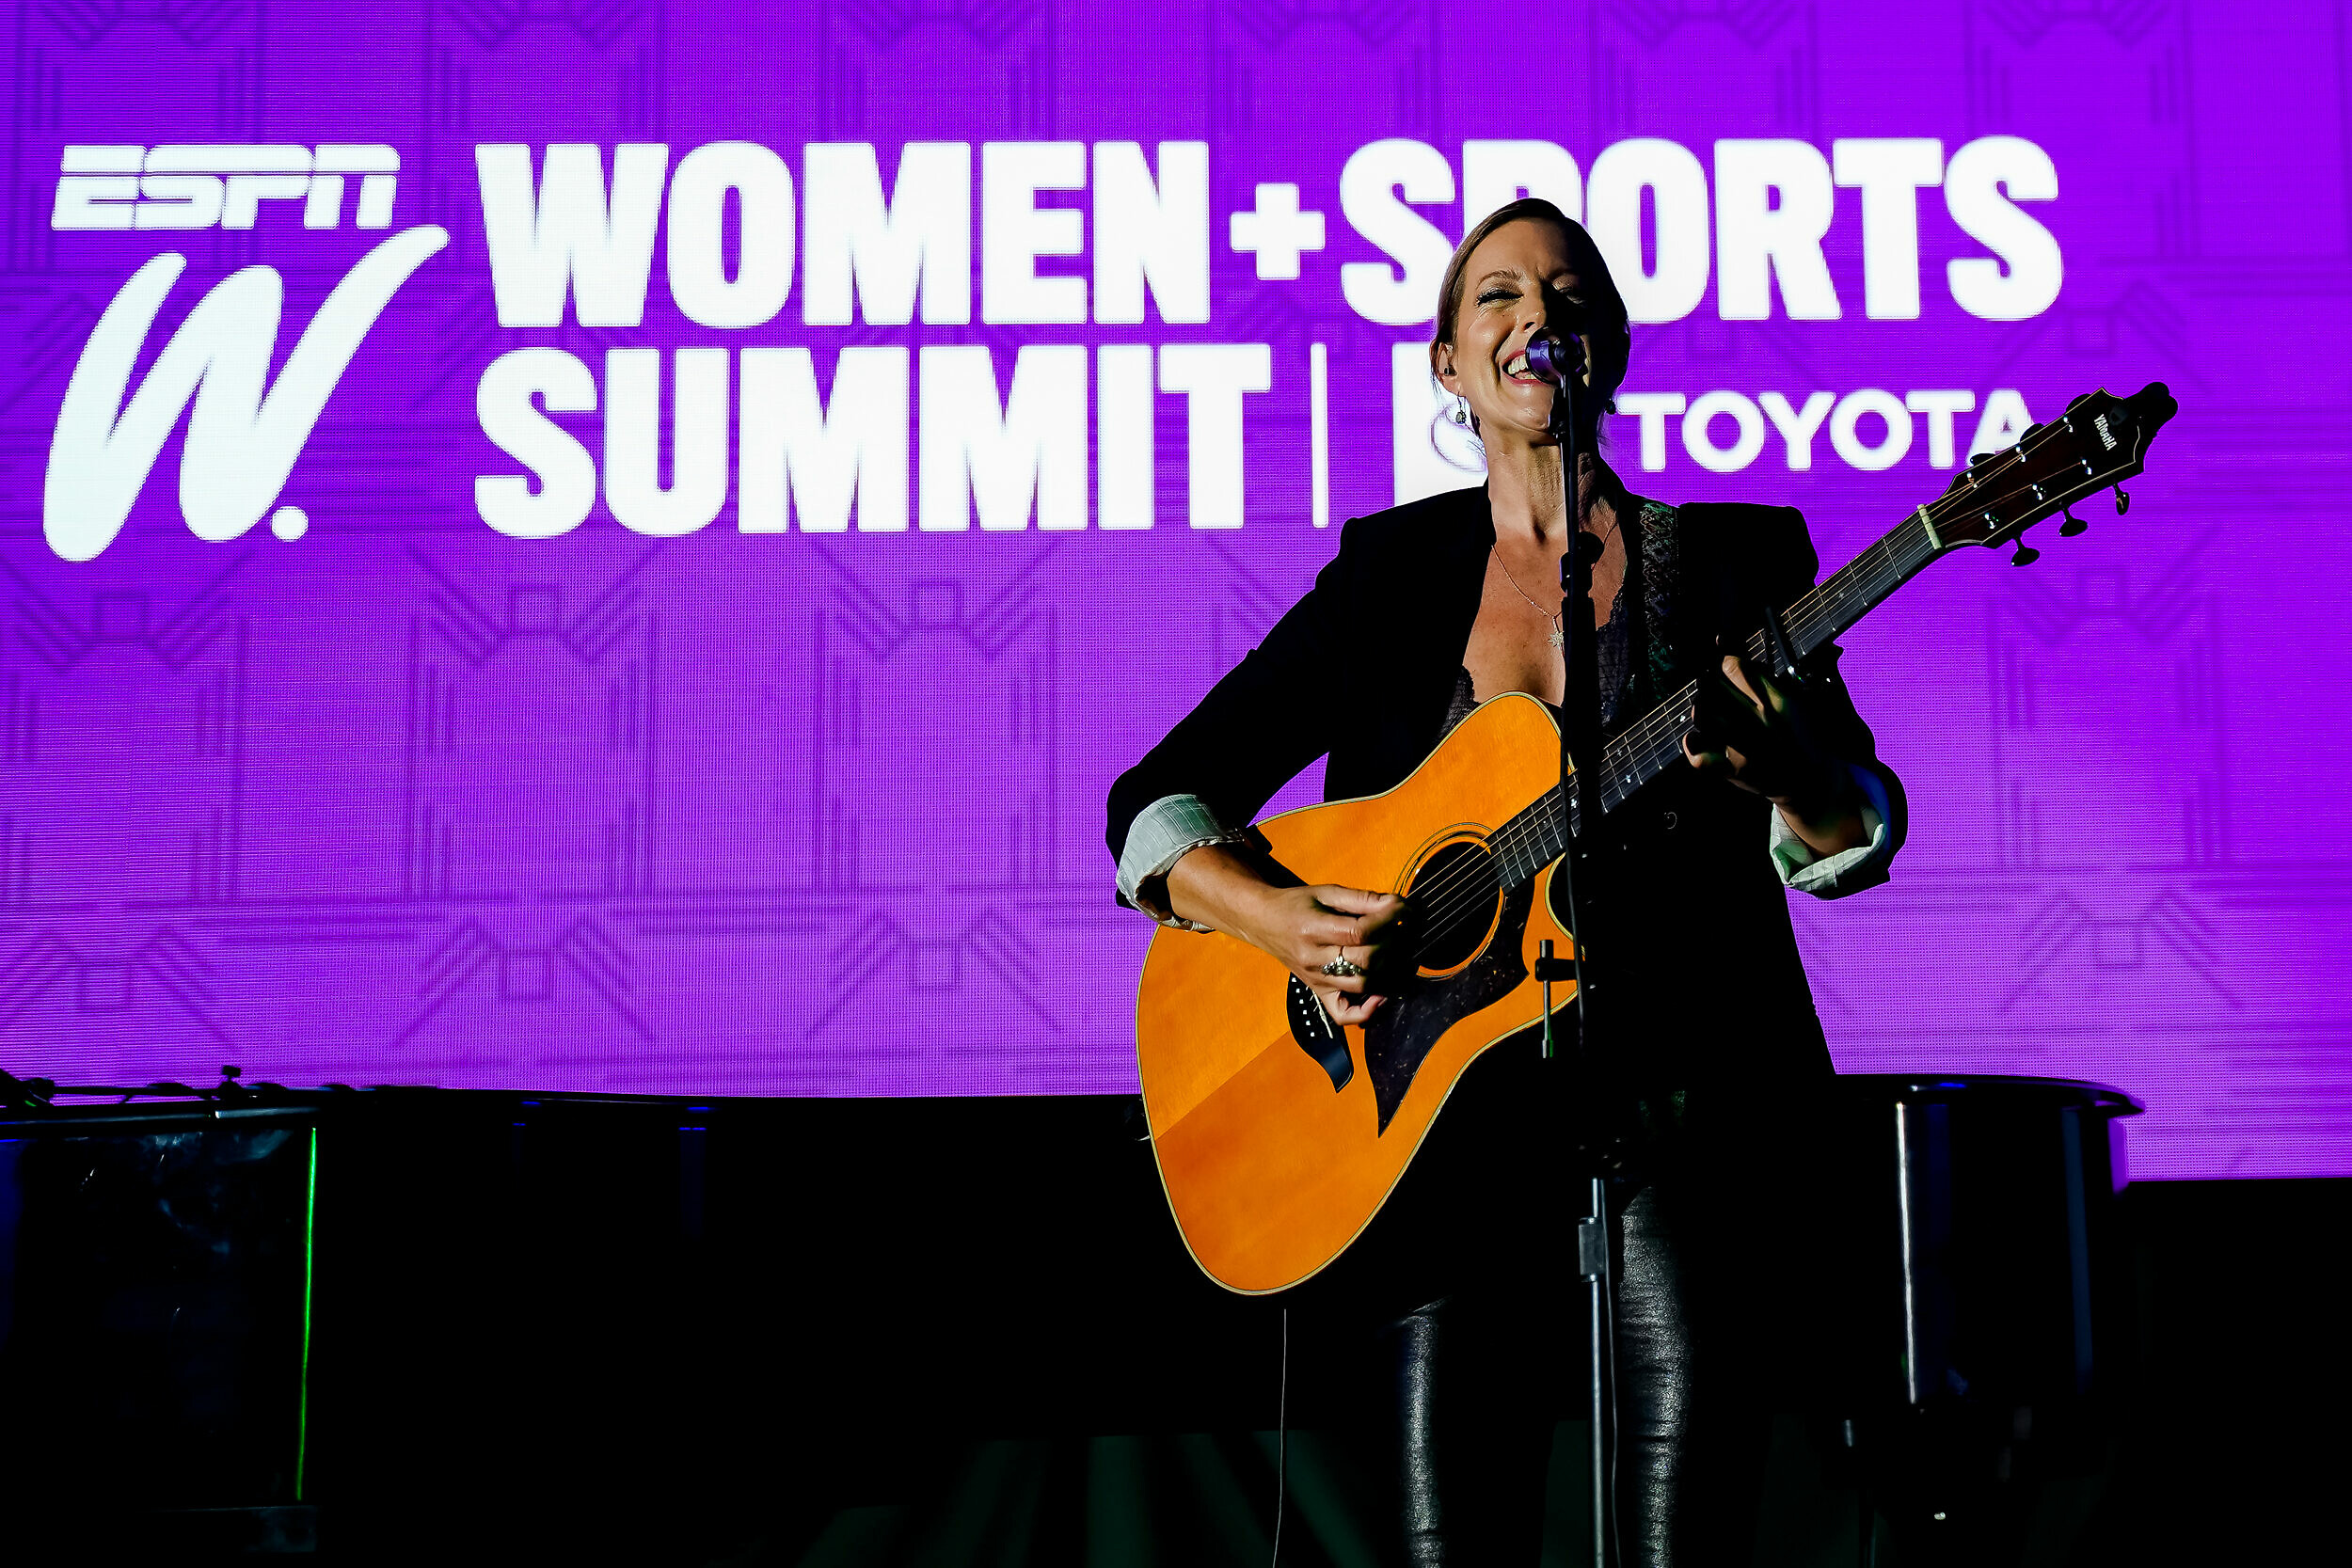 espnW: Women + Sports Summit - October 19, 2021